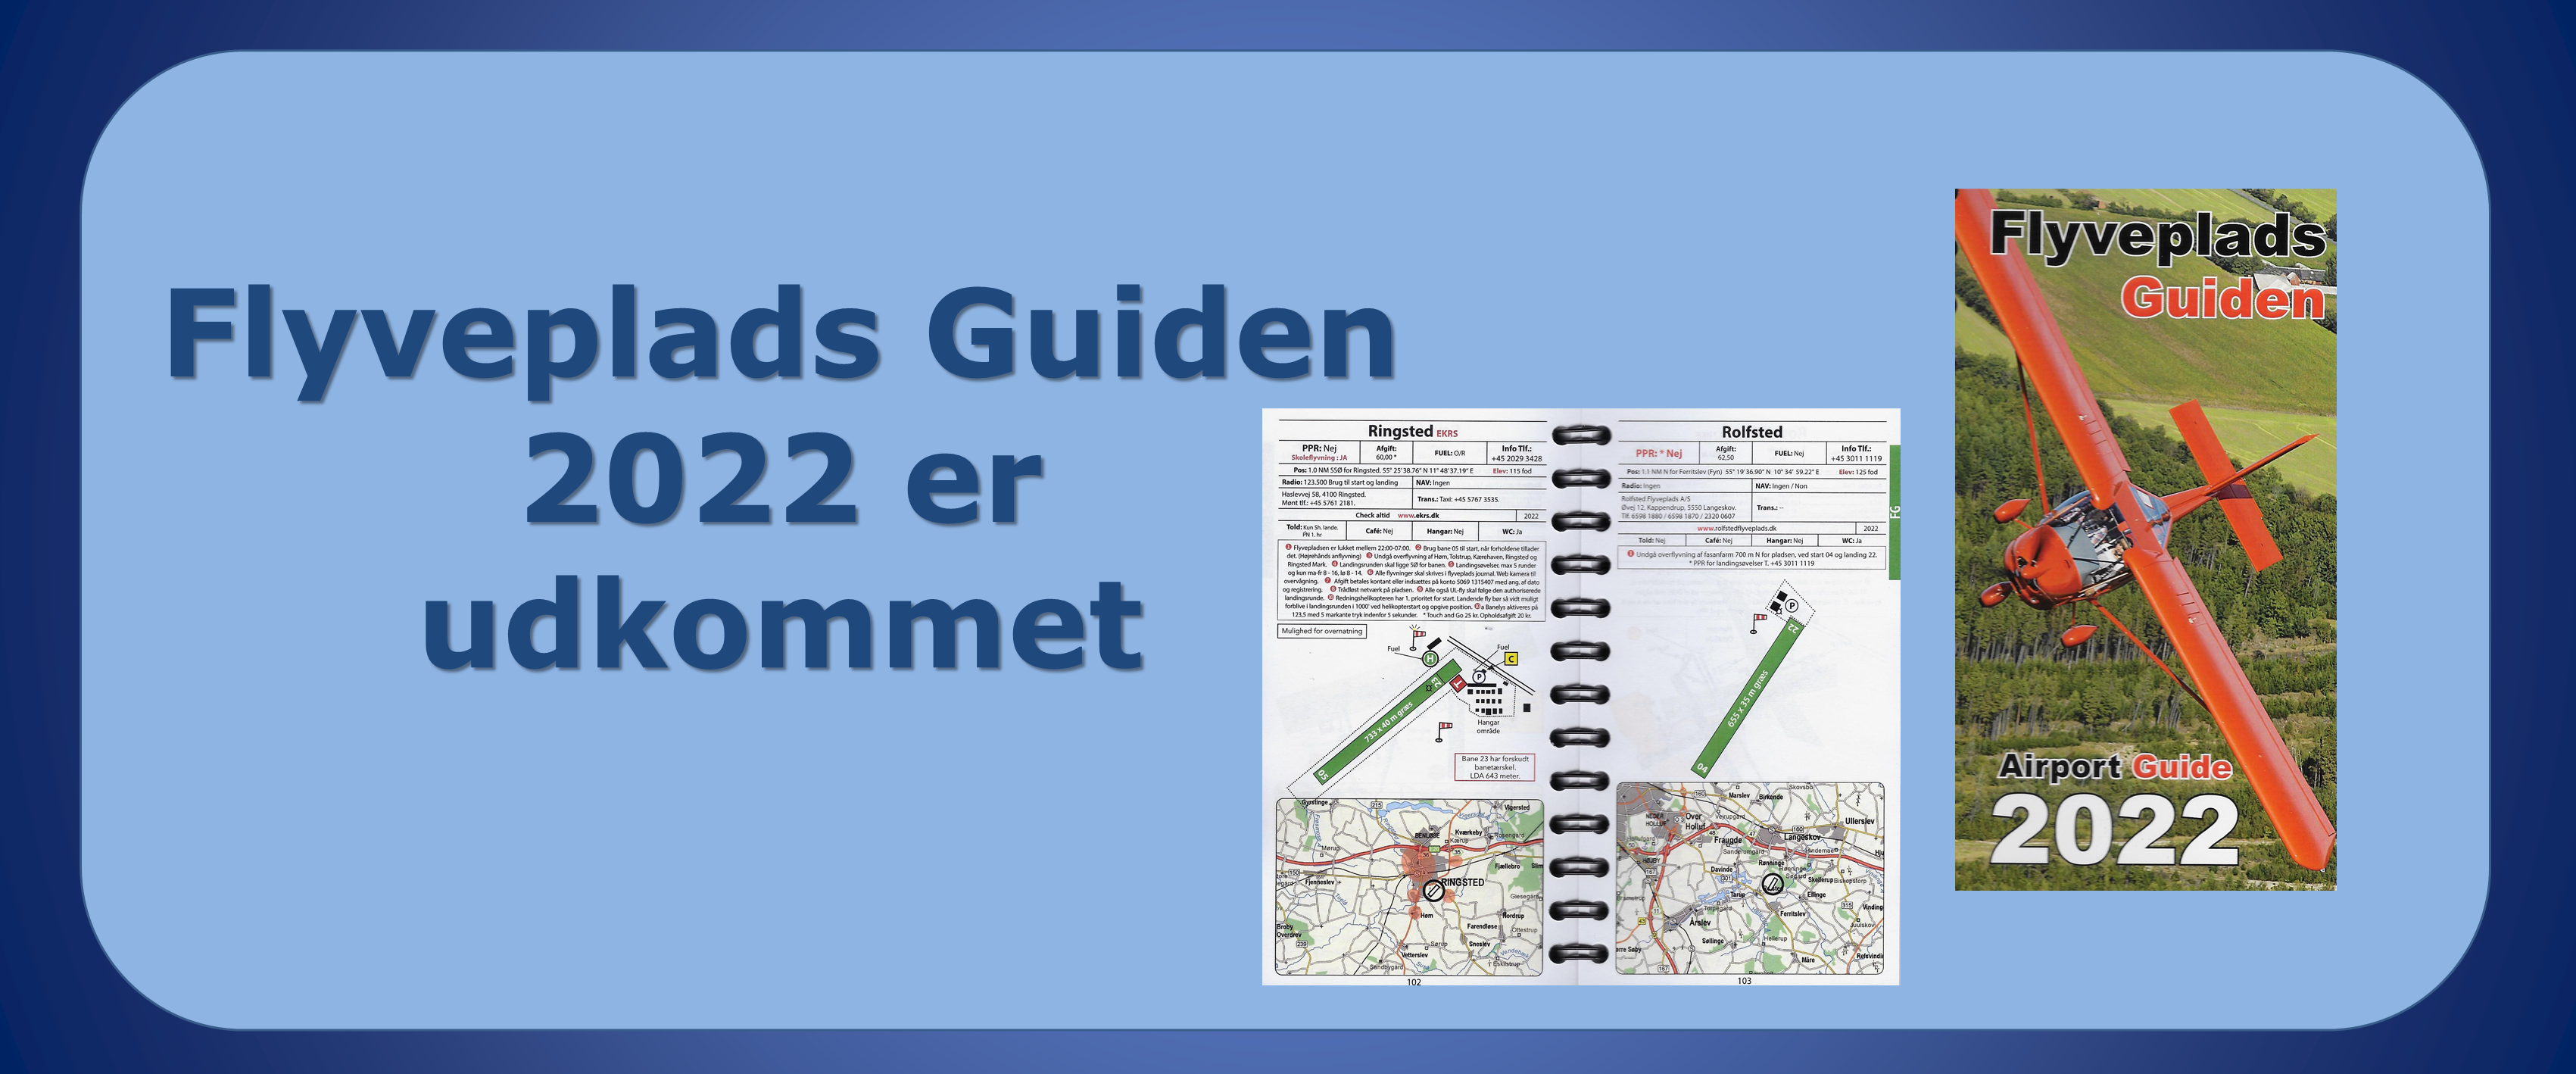 Flyveplads Guiden 2022